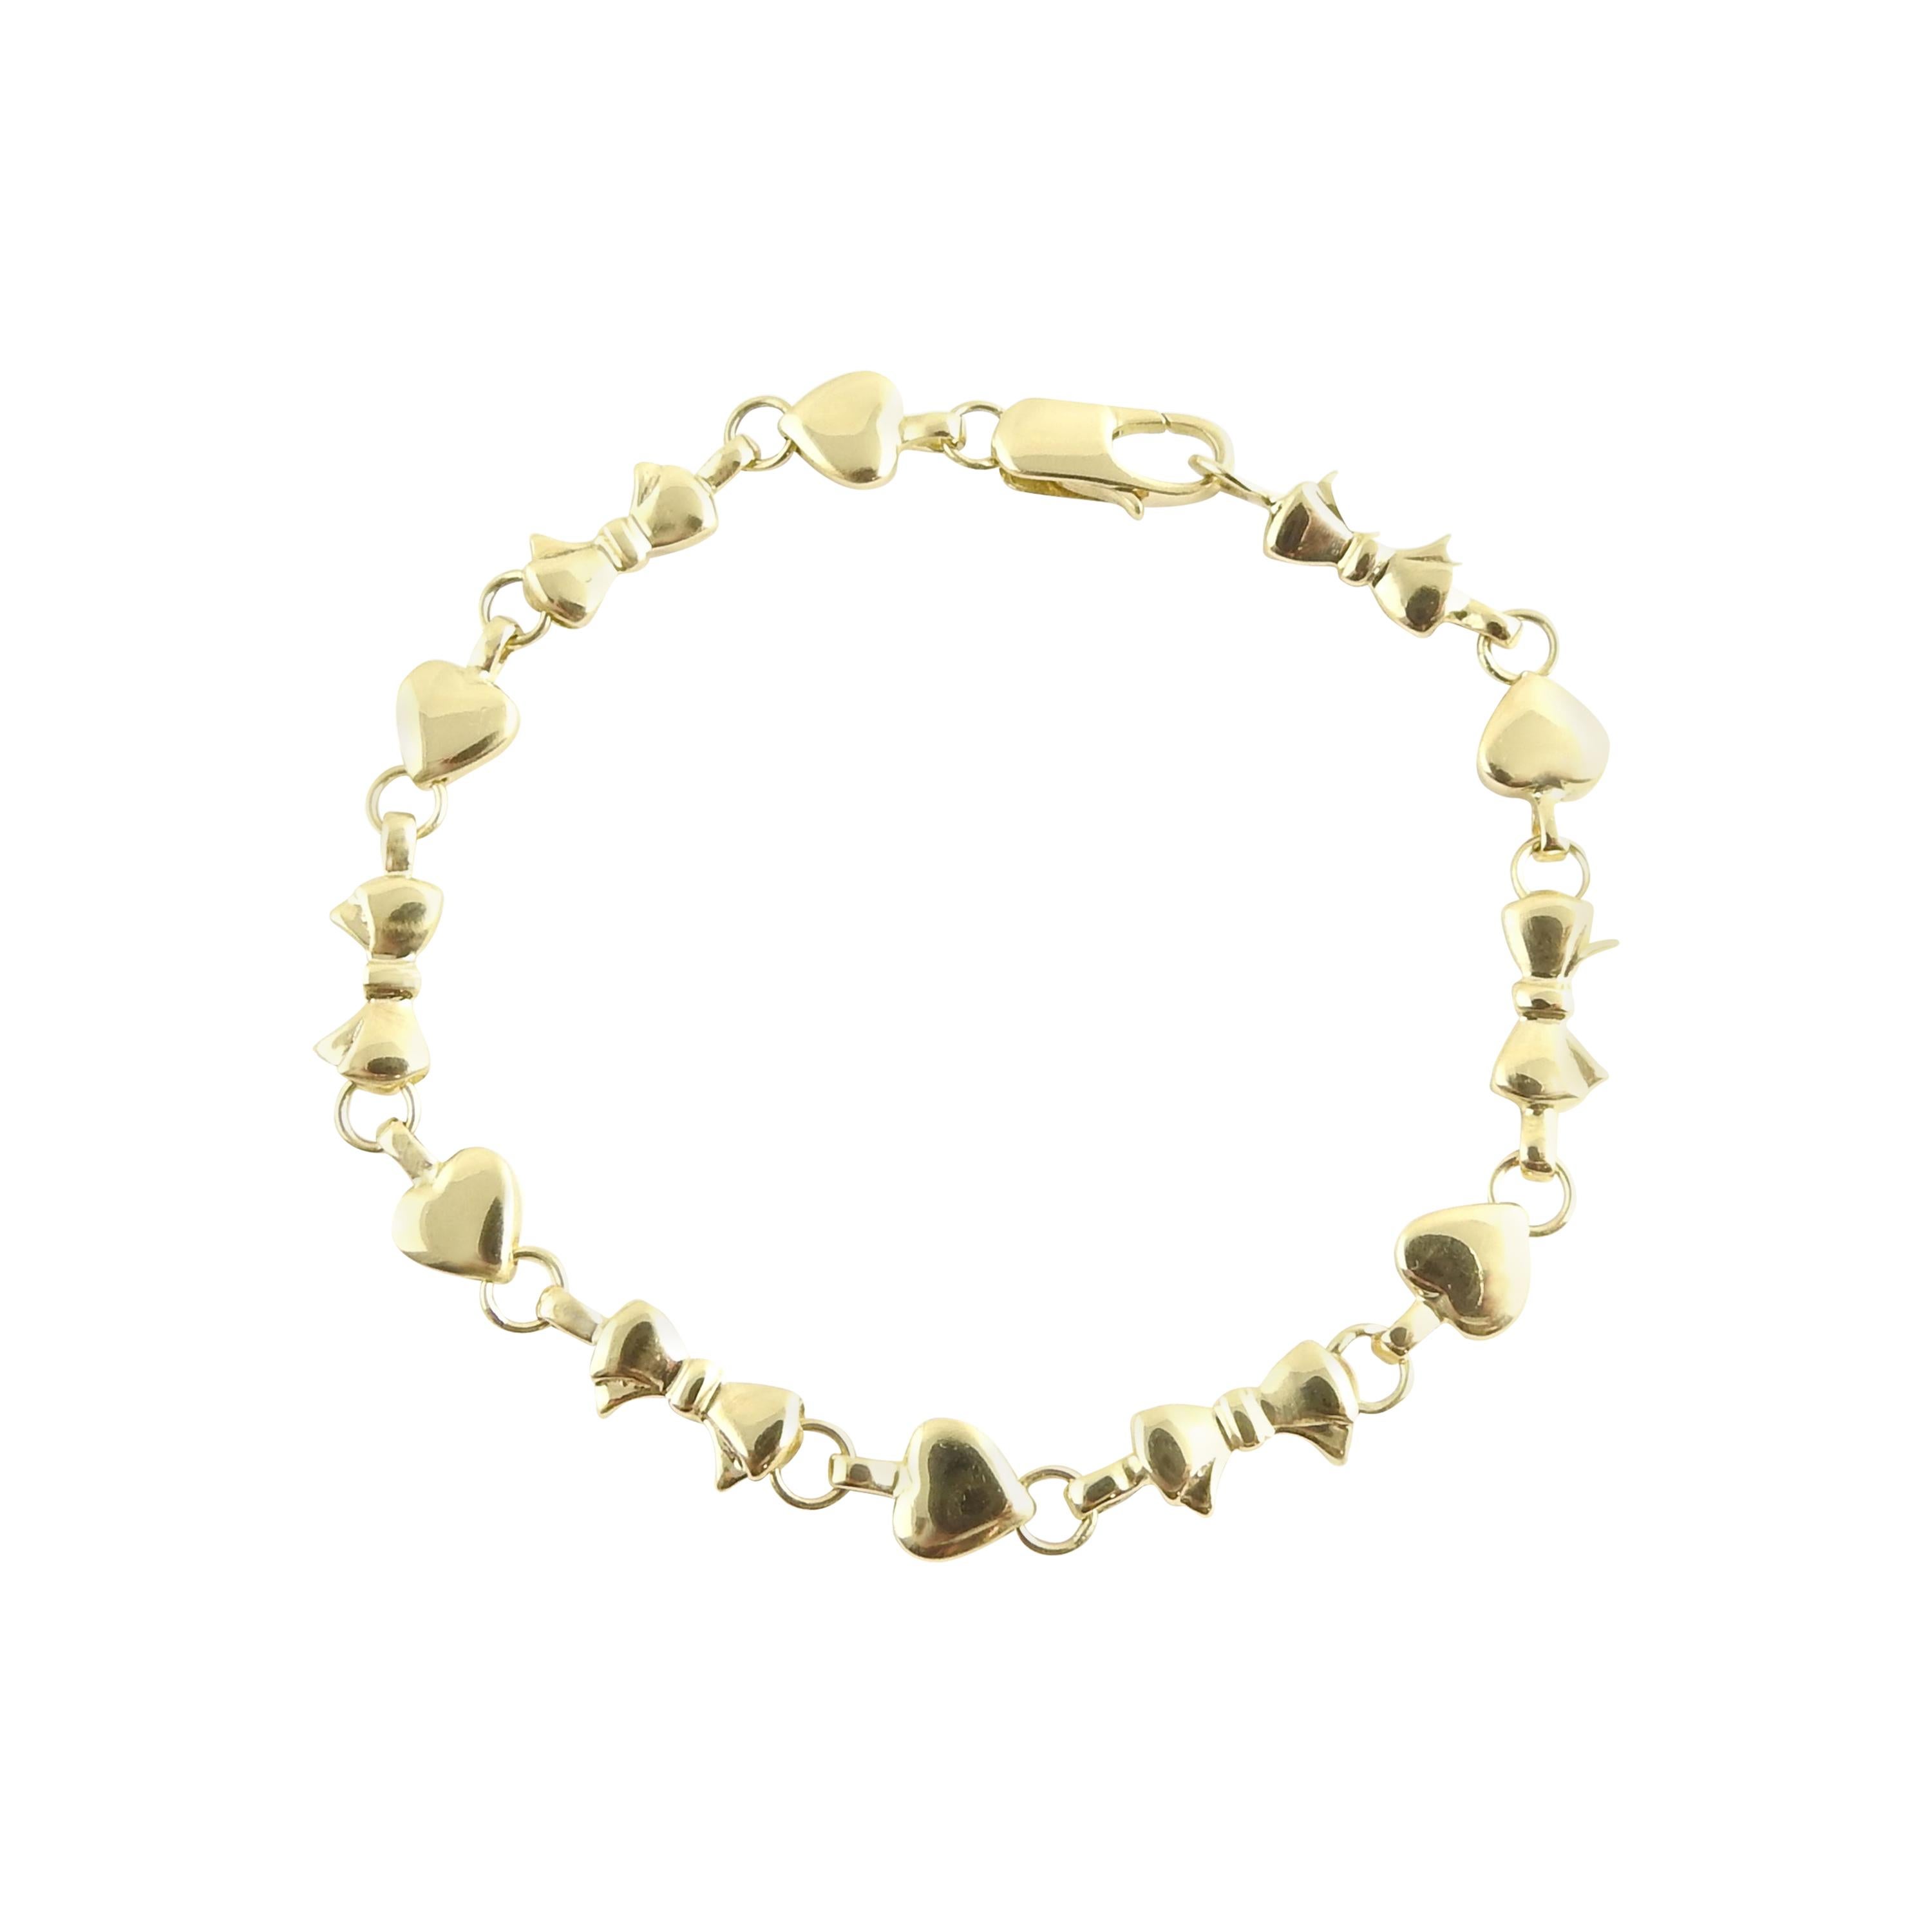 Tiffany & Co. 18 Karat Yellow Gold Hearts and Bows Link Bracelet